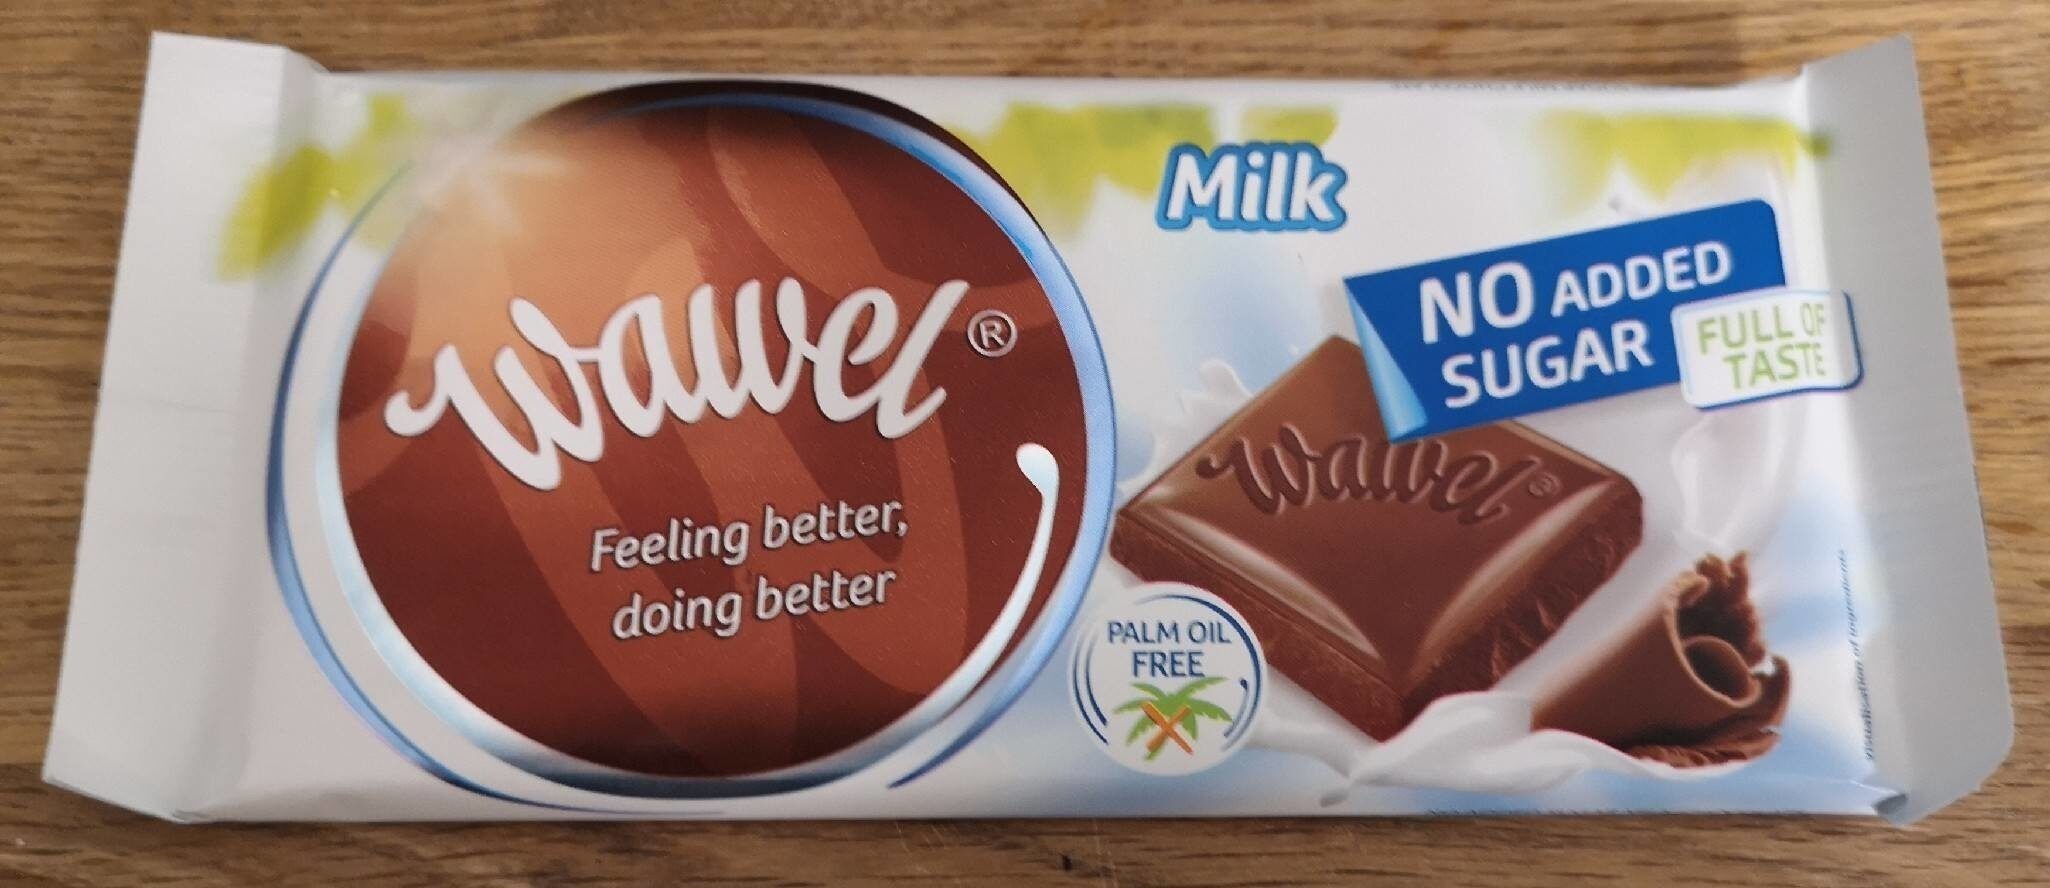 Wawel milk - Product